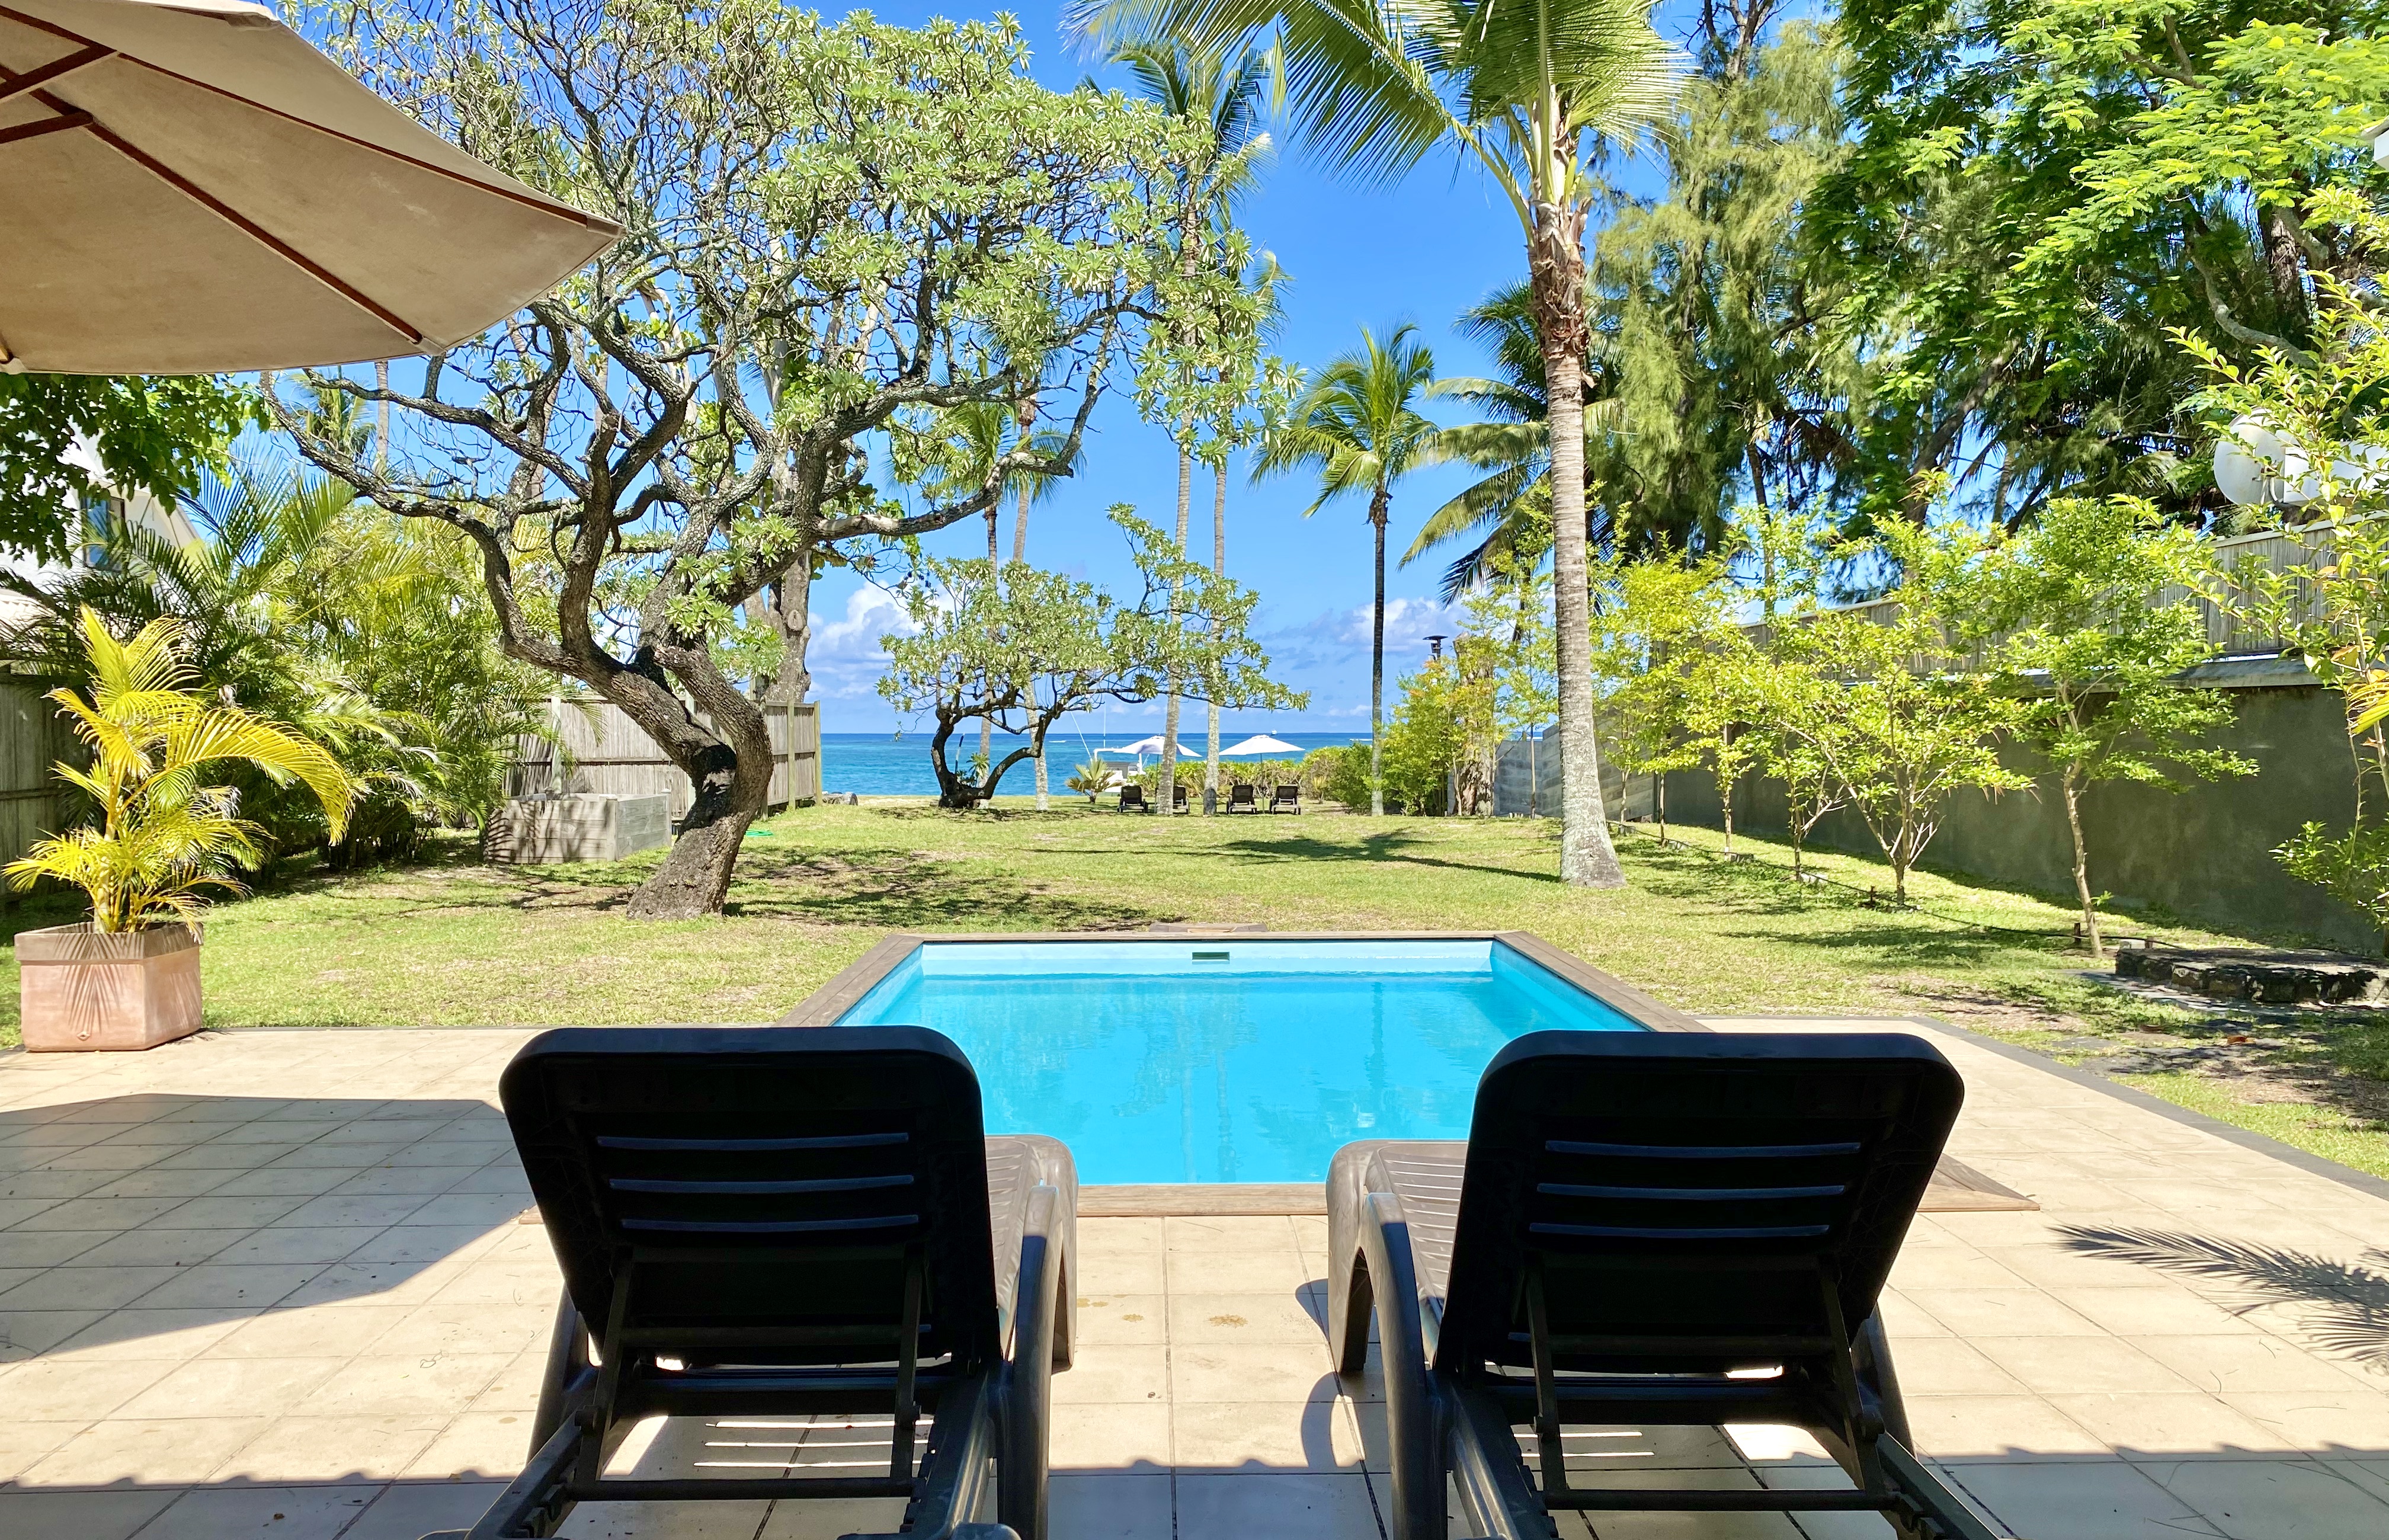 Villa Tropic 2  pool area with sun beds